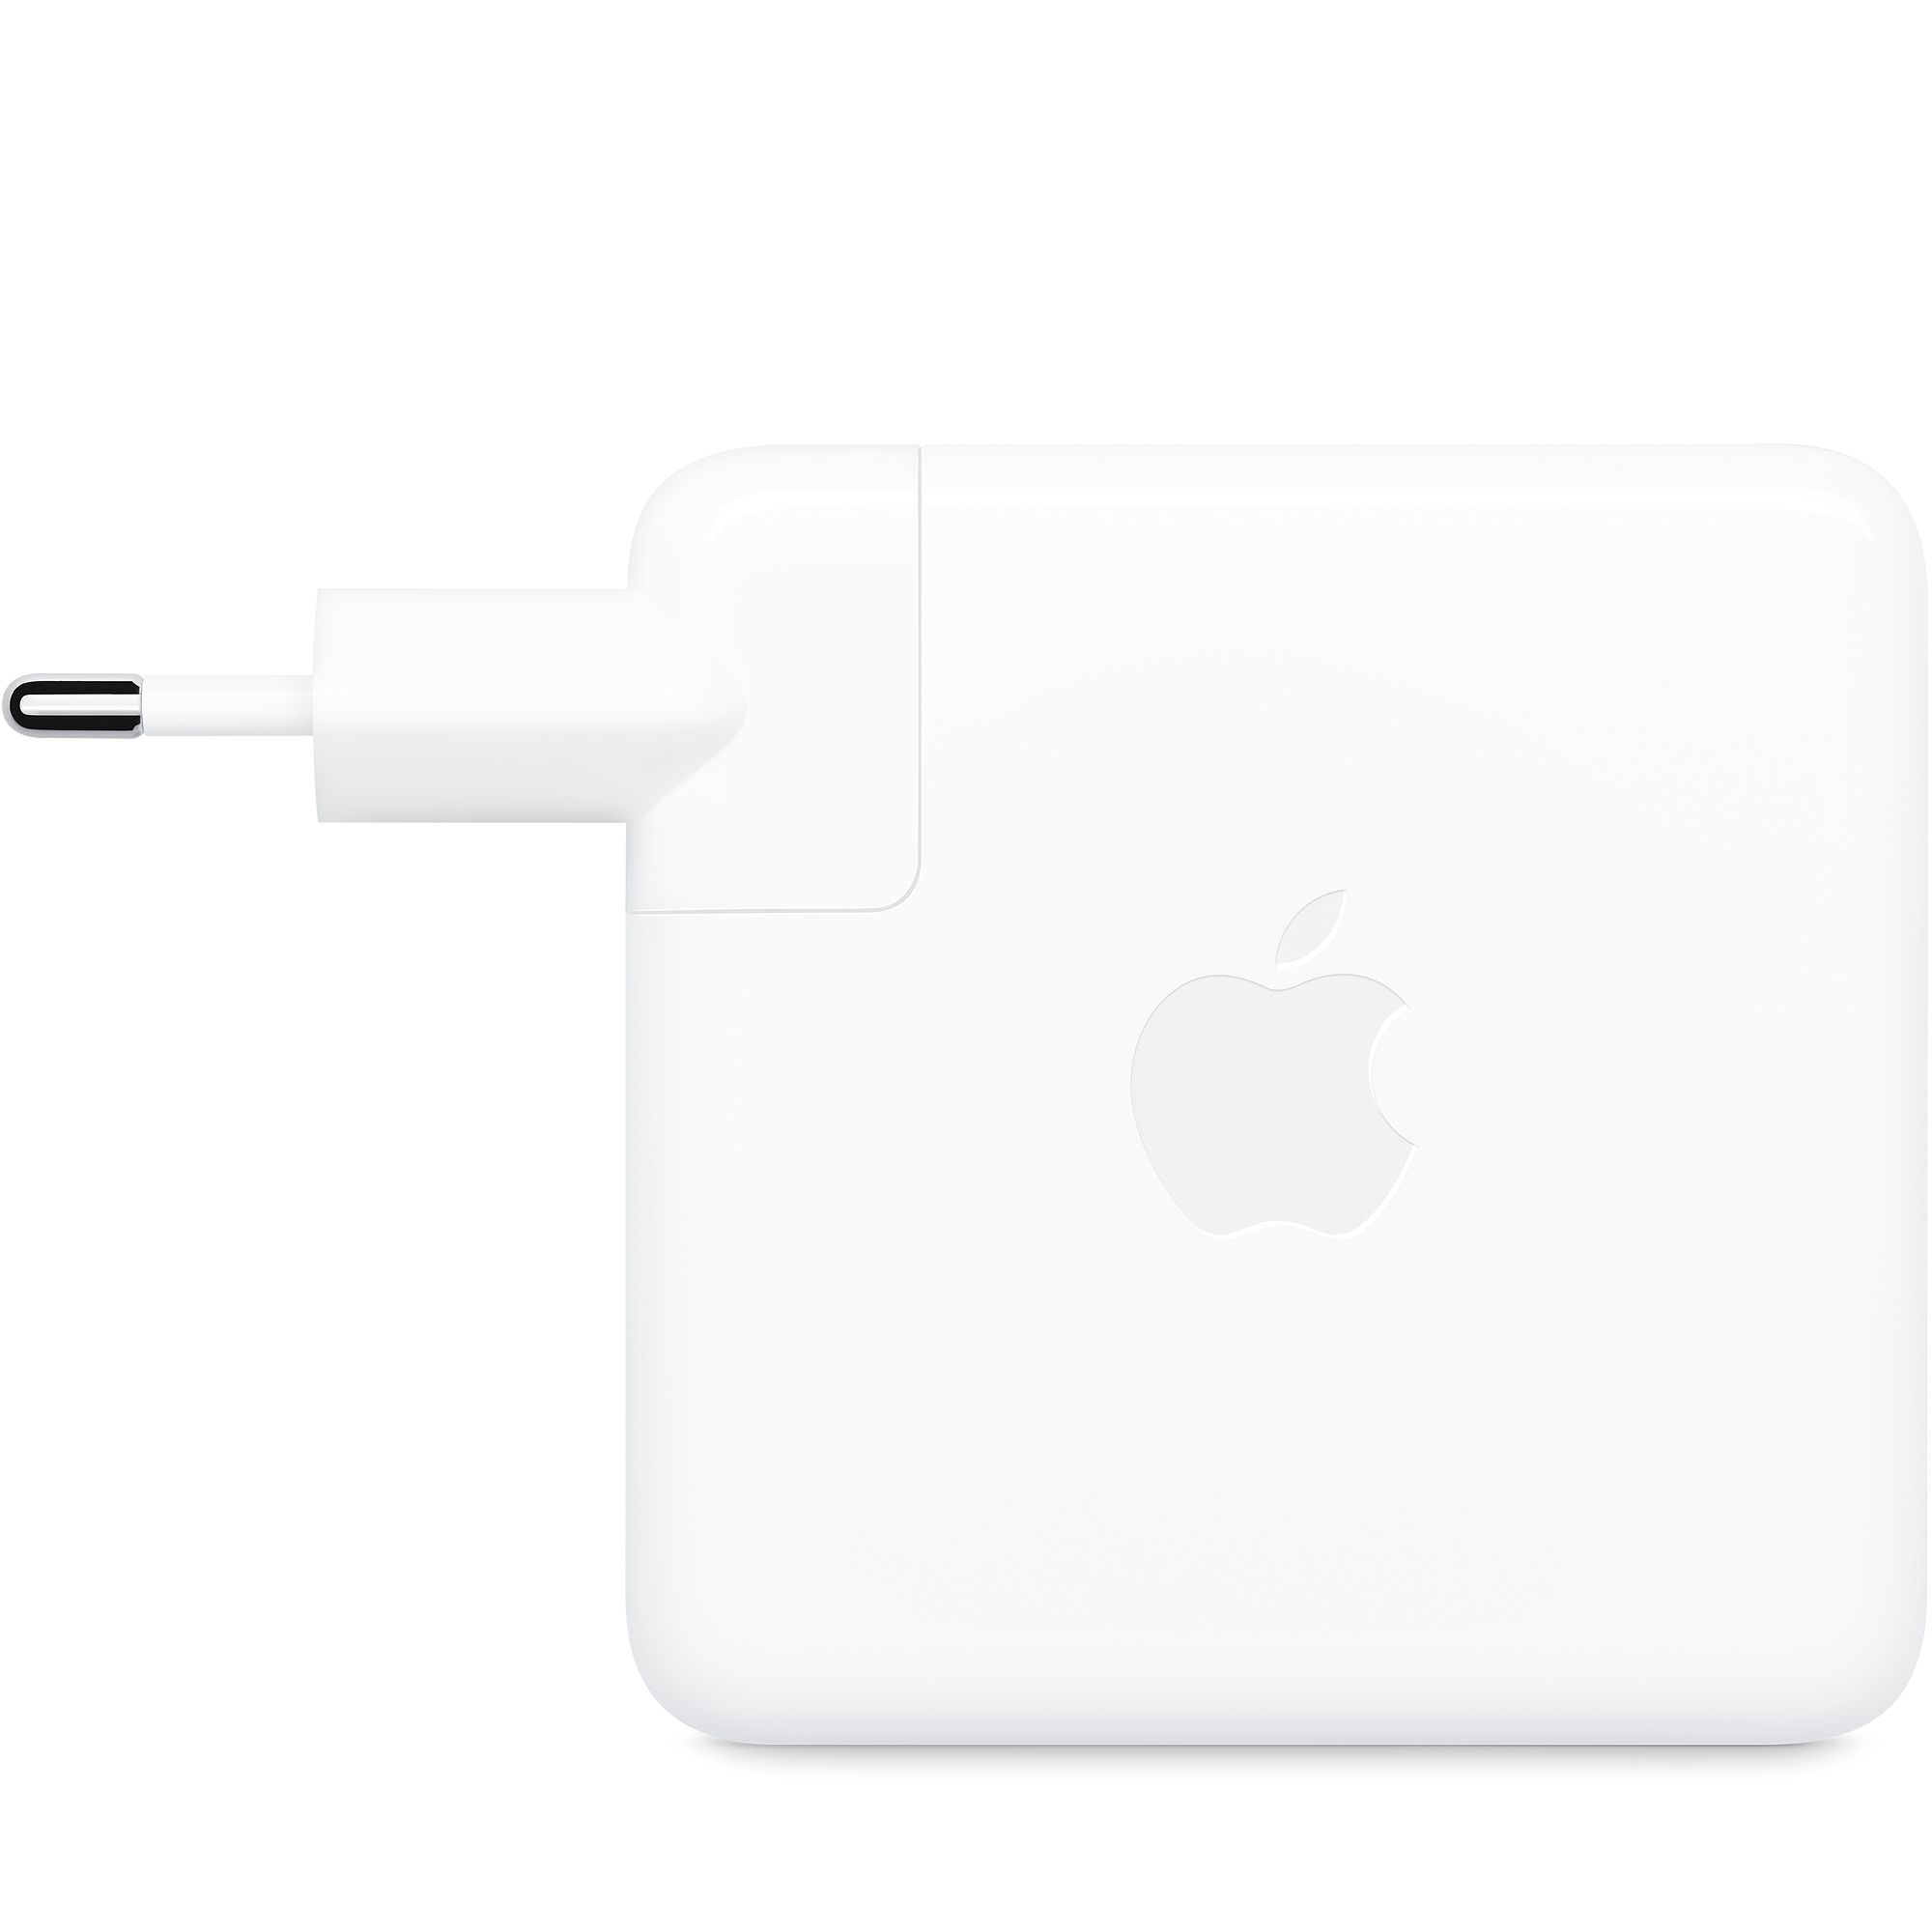 Адаптер питания 20w. Apple 96w USB-C Power Adapter. Блок питания Apple mnf82z/a для Apple. Адаптер питания Apple 96w USB-C Power Adapter, белый. СЗУ Apple MACBOOK 87w USB-C Power Adapter.